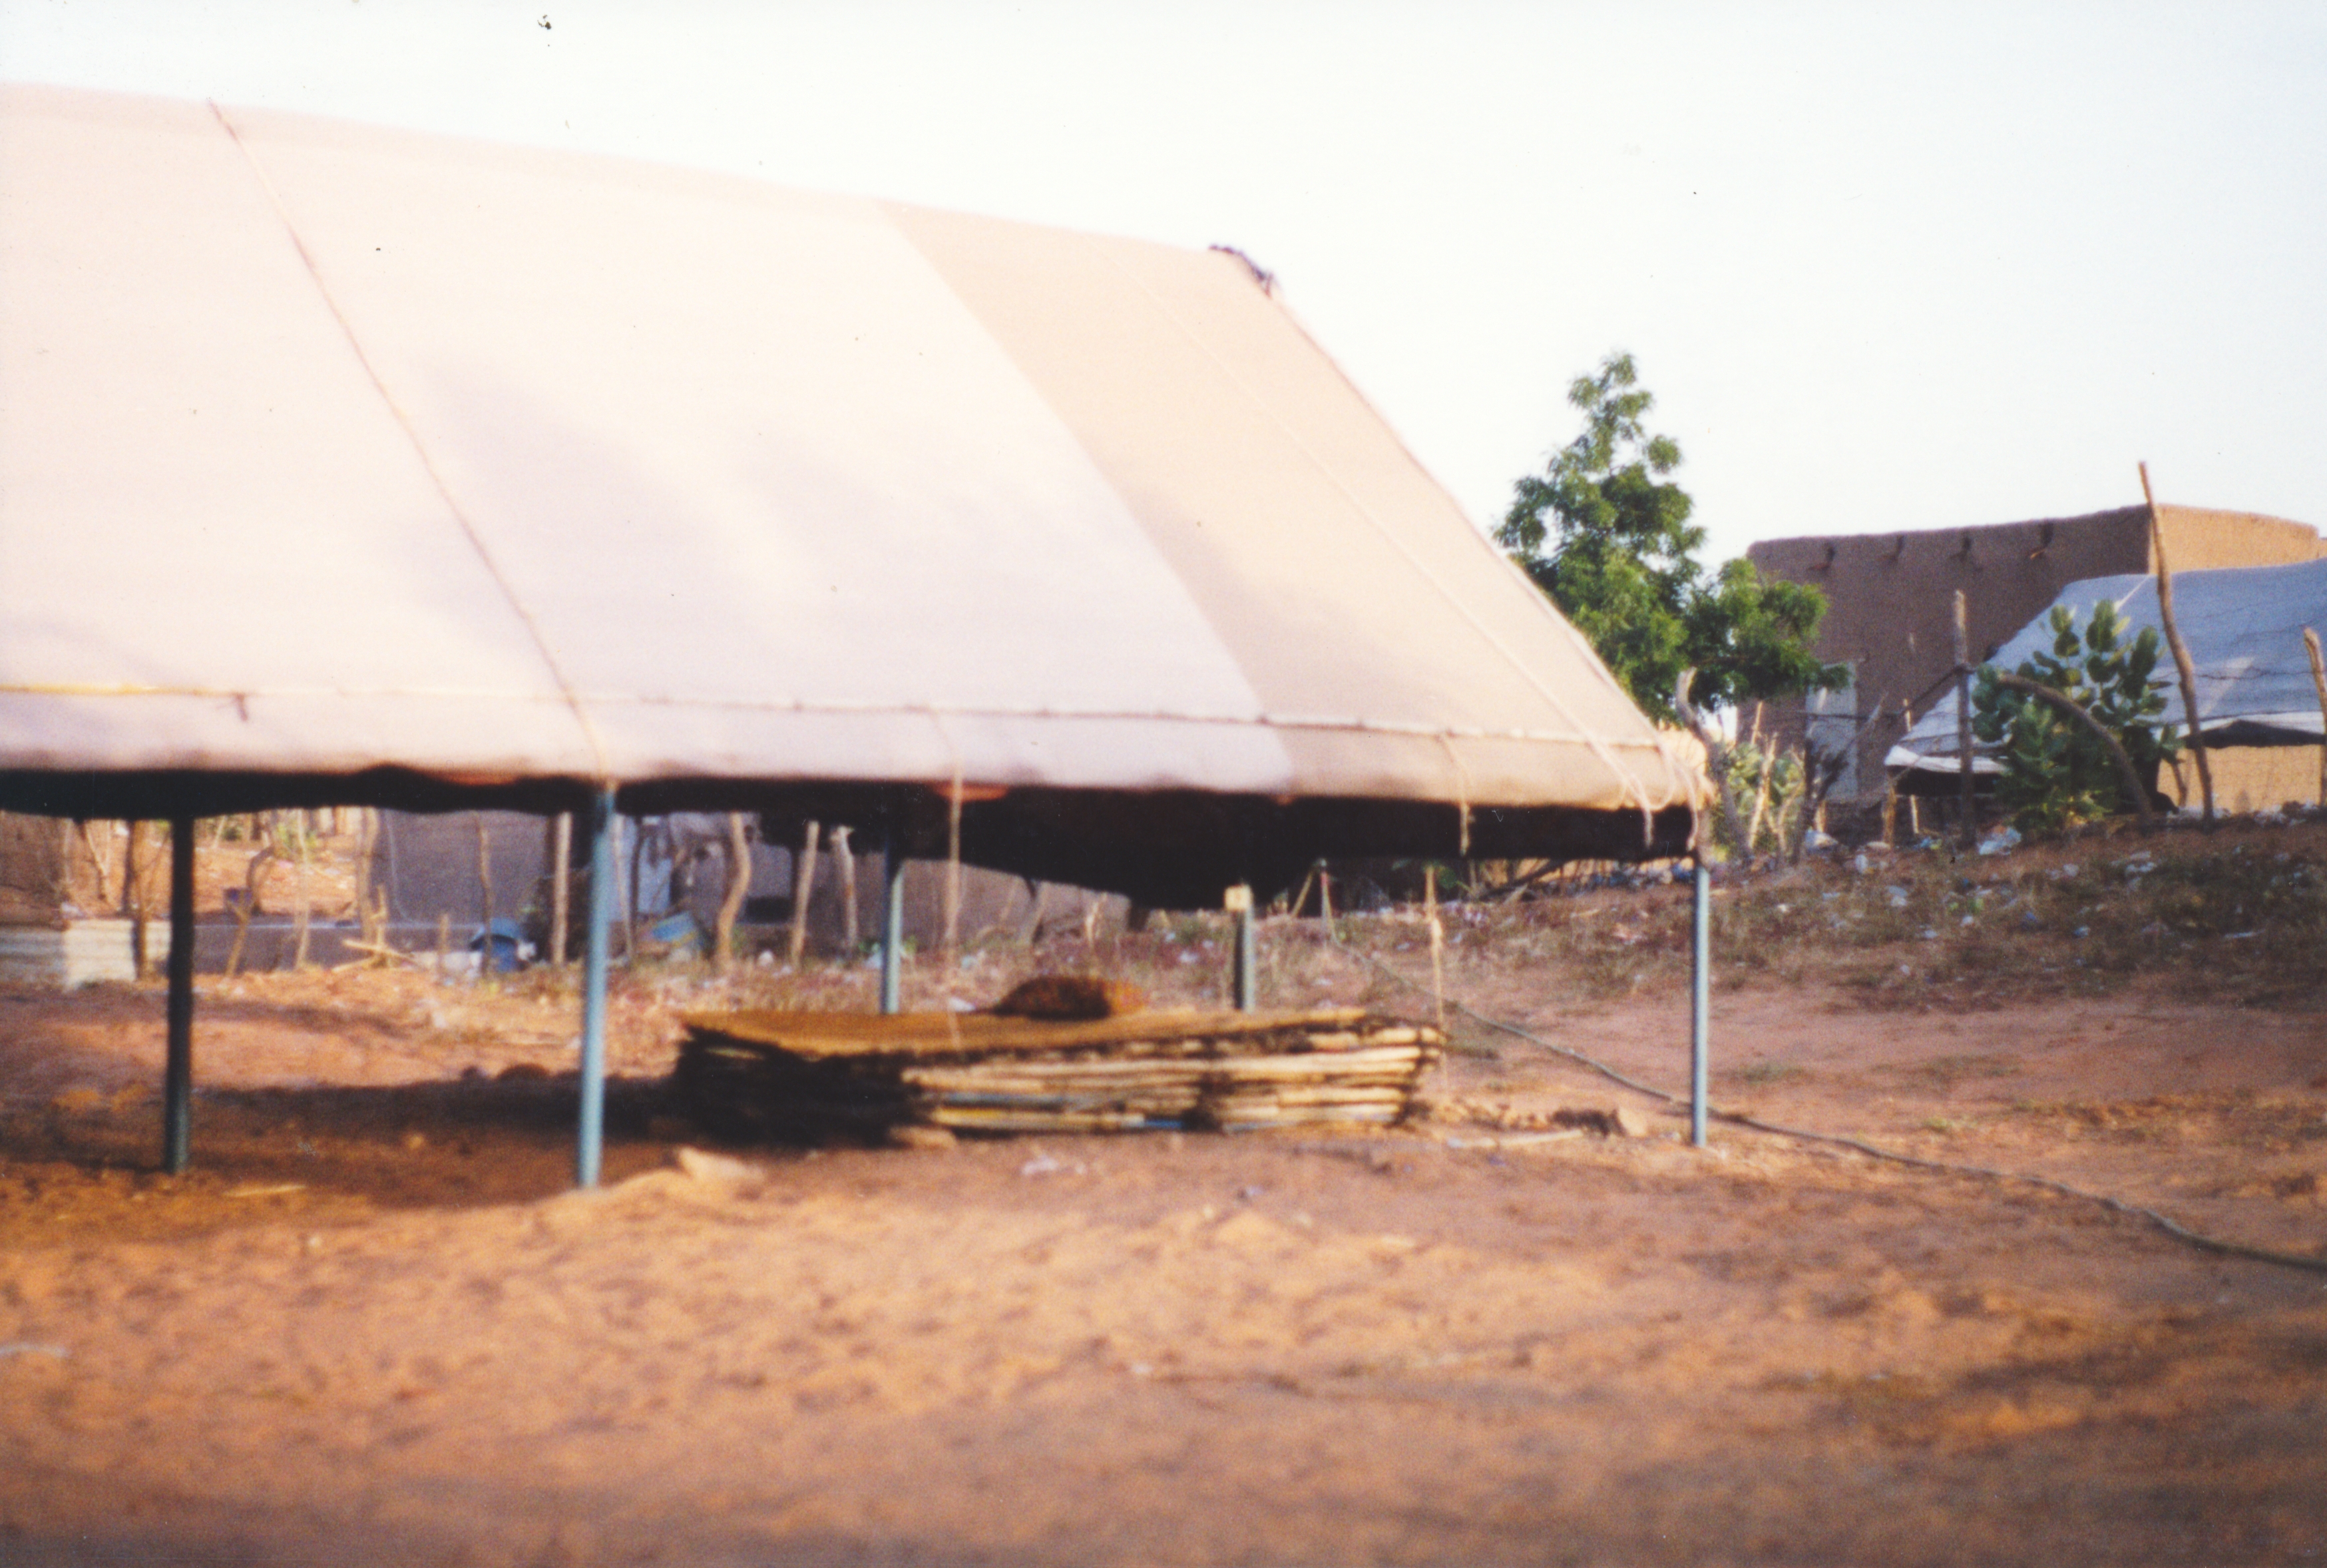 A hangar, or semipermanent tent, with a wooden sleeping platform underneath.